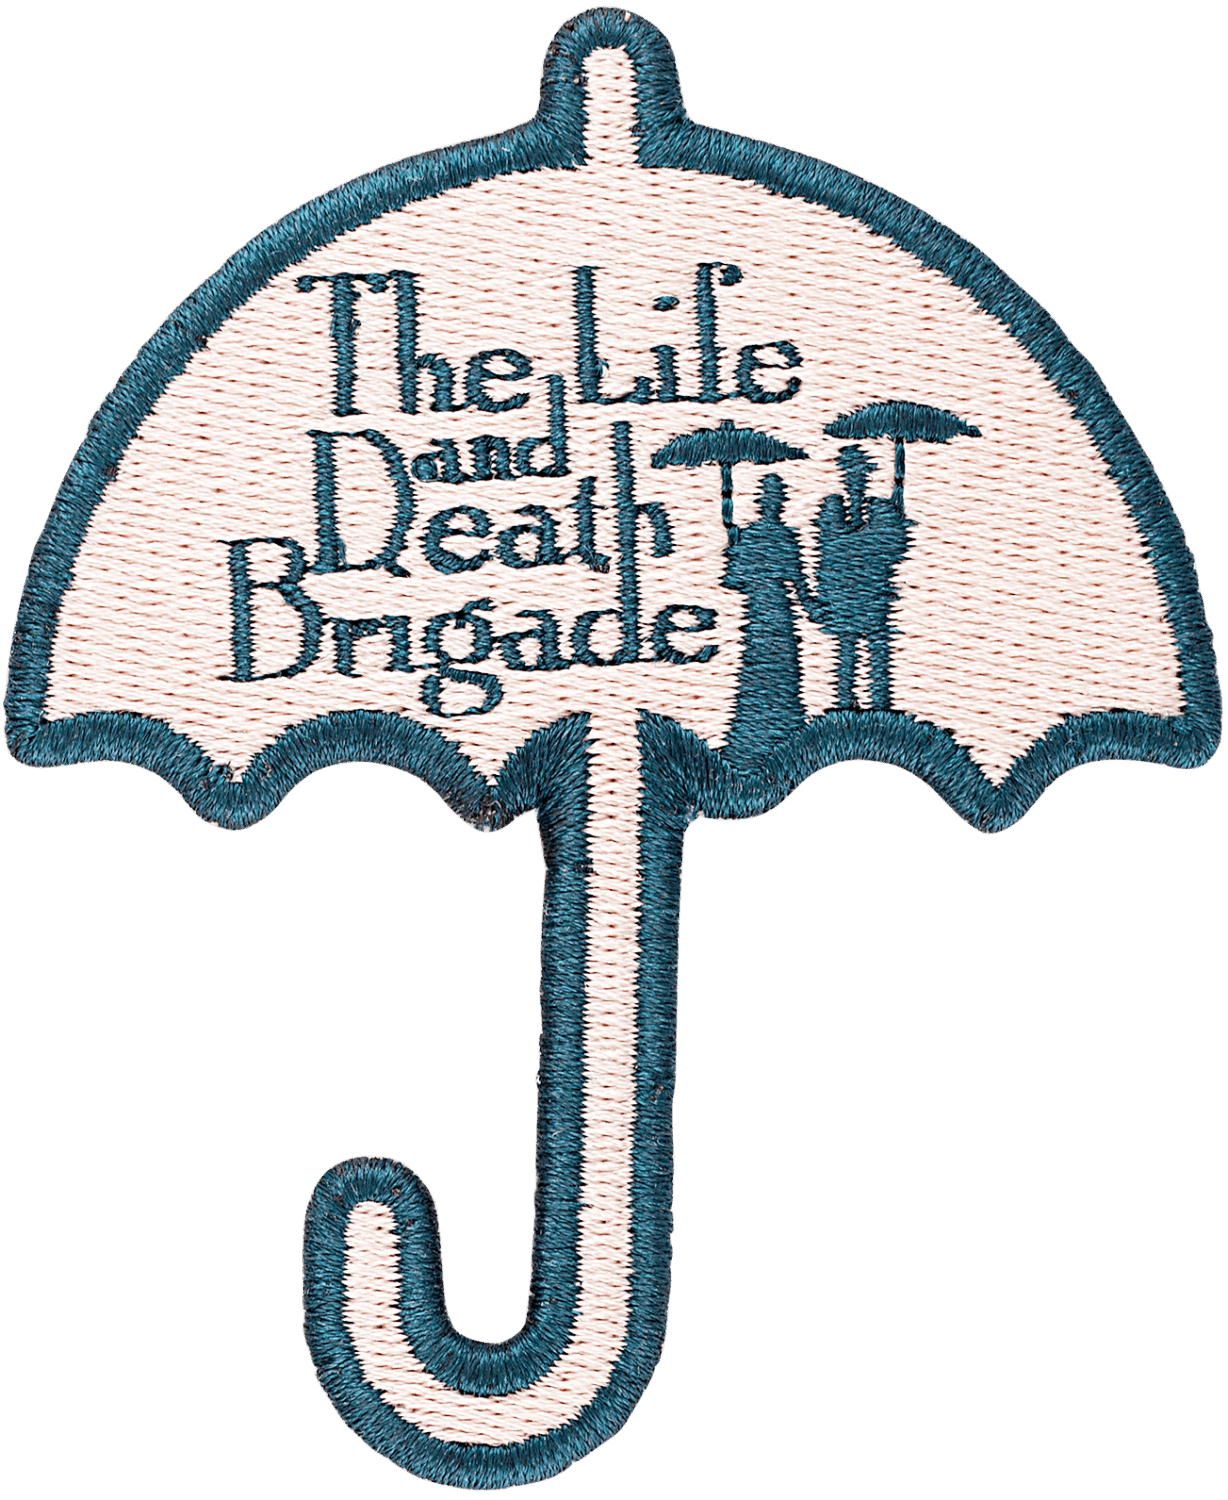 The Life and Death Brigade Umbrella Patch